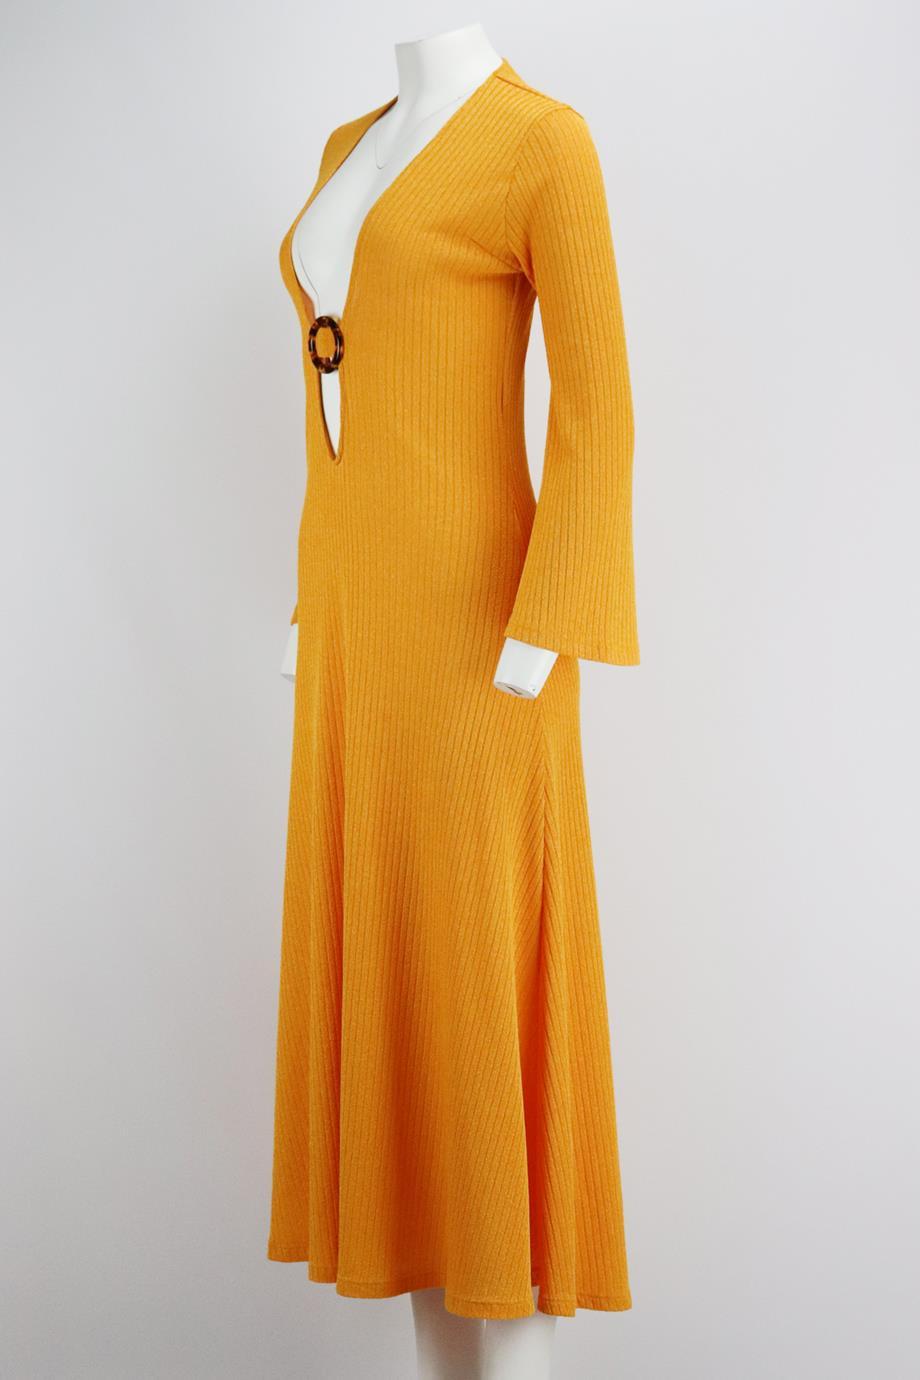 dodo bar or yellow dress